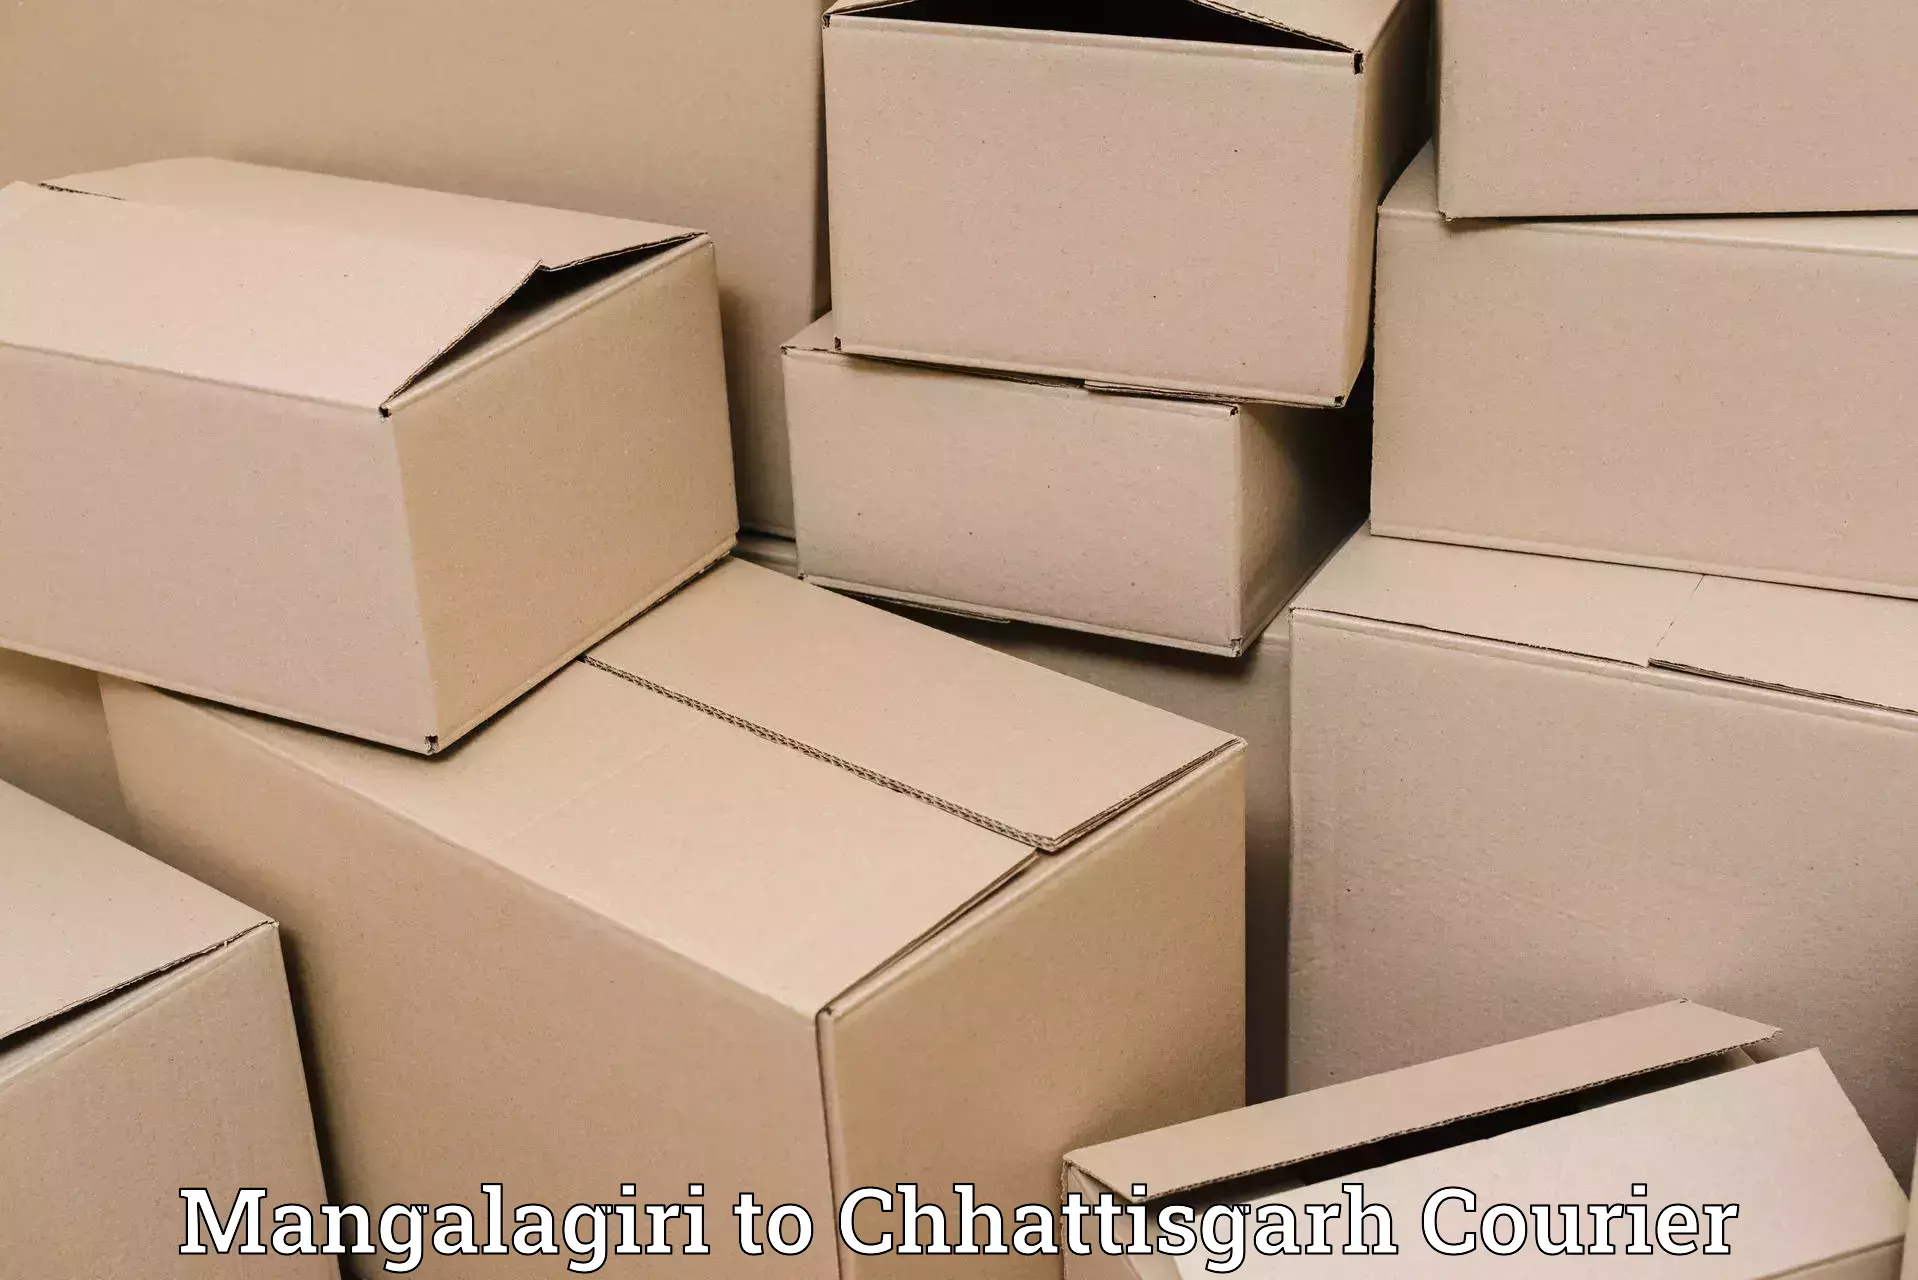 Courier service booking Mangalagiri to Bijapur Chhattisgarh